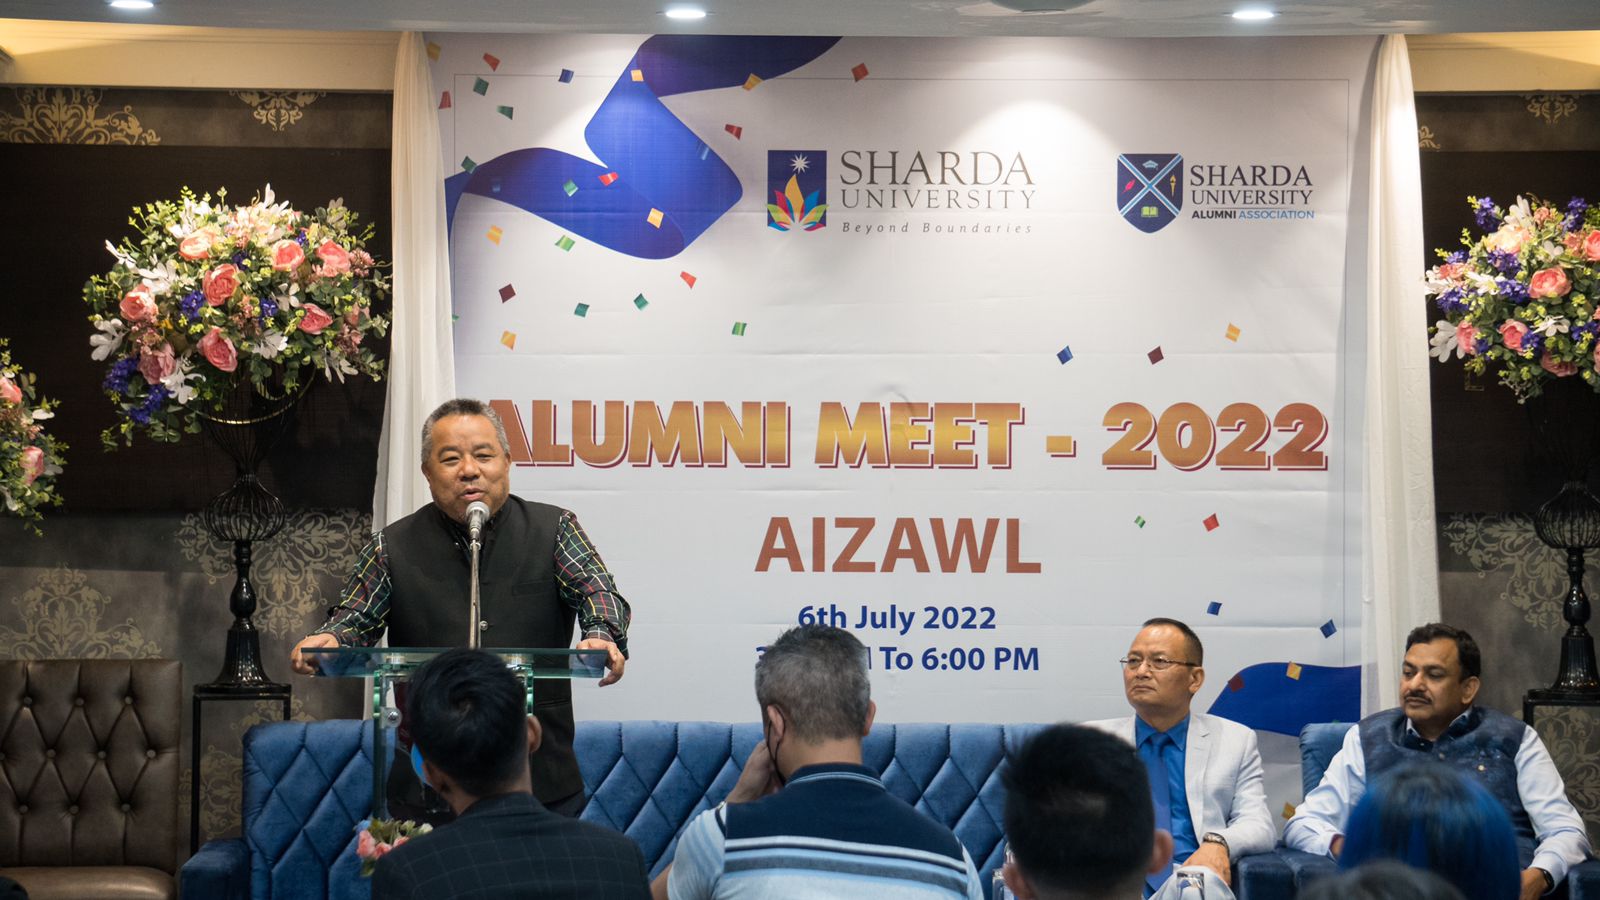 Alumni Meet in Aizawl on 6th July 2022